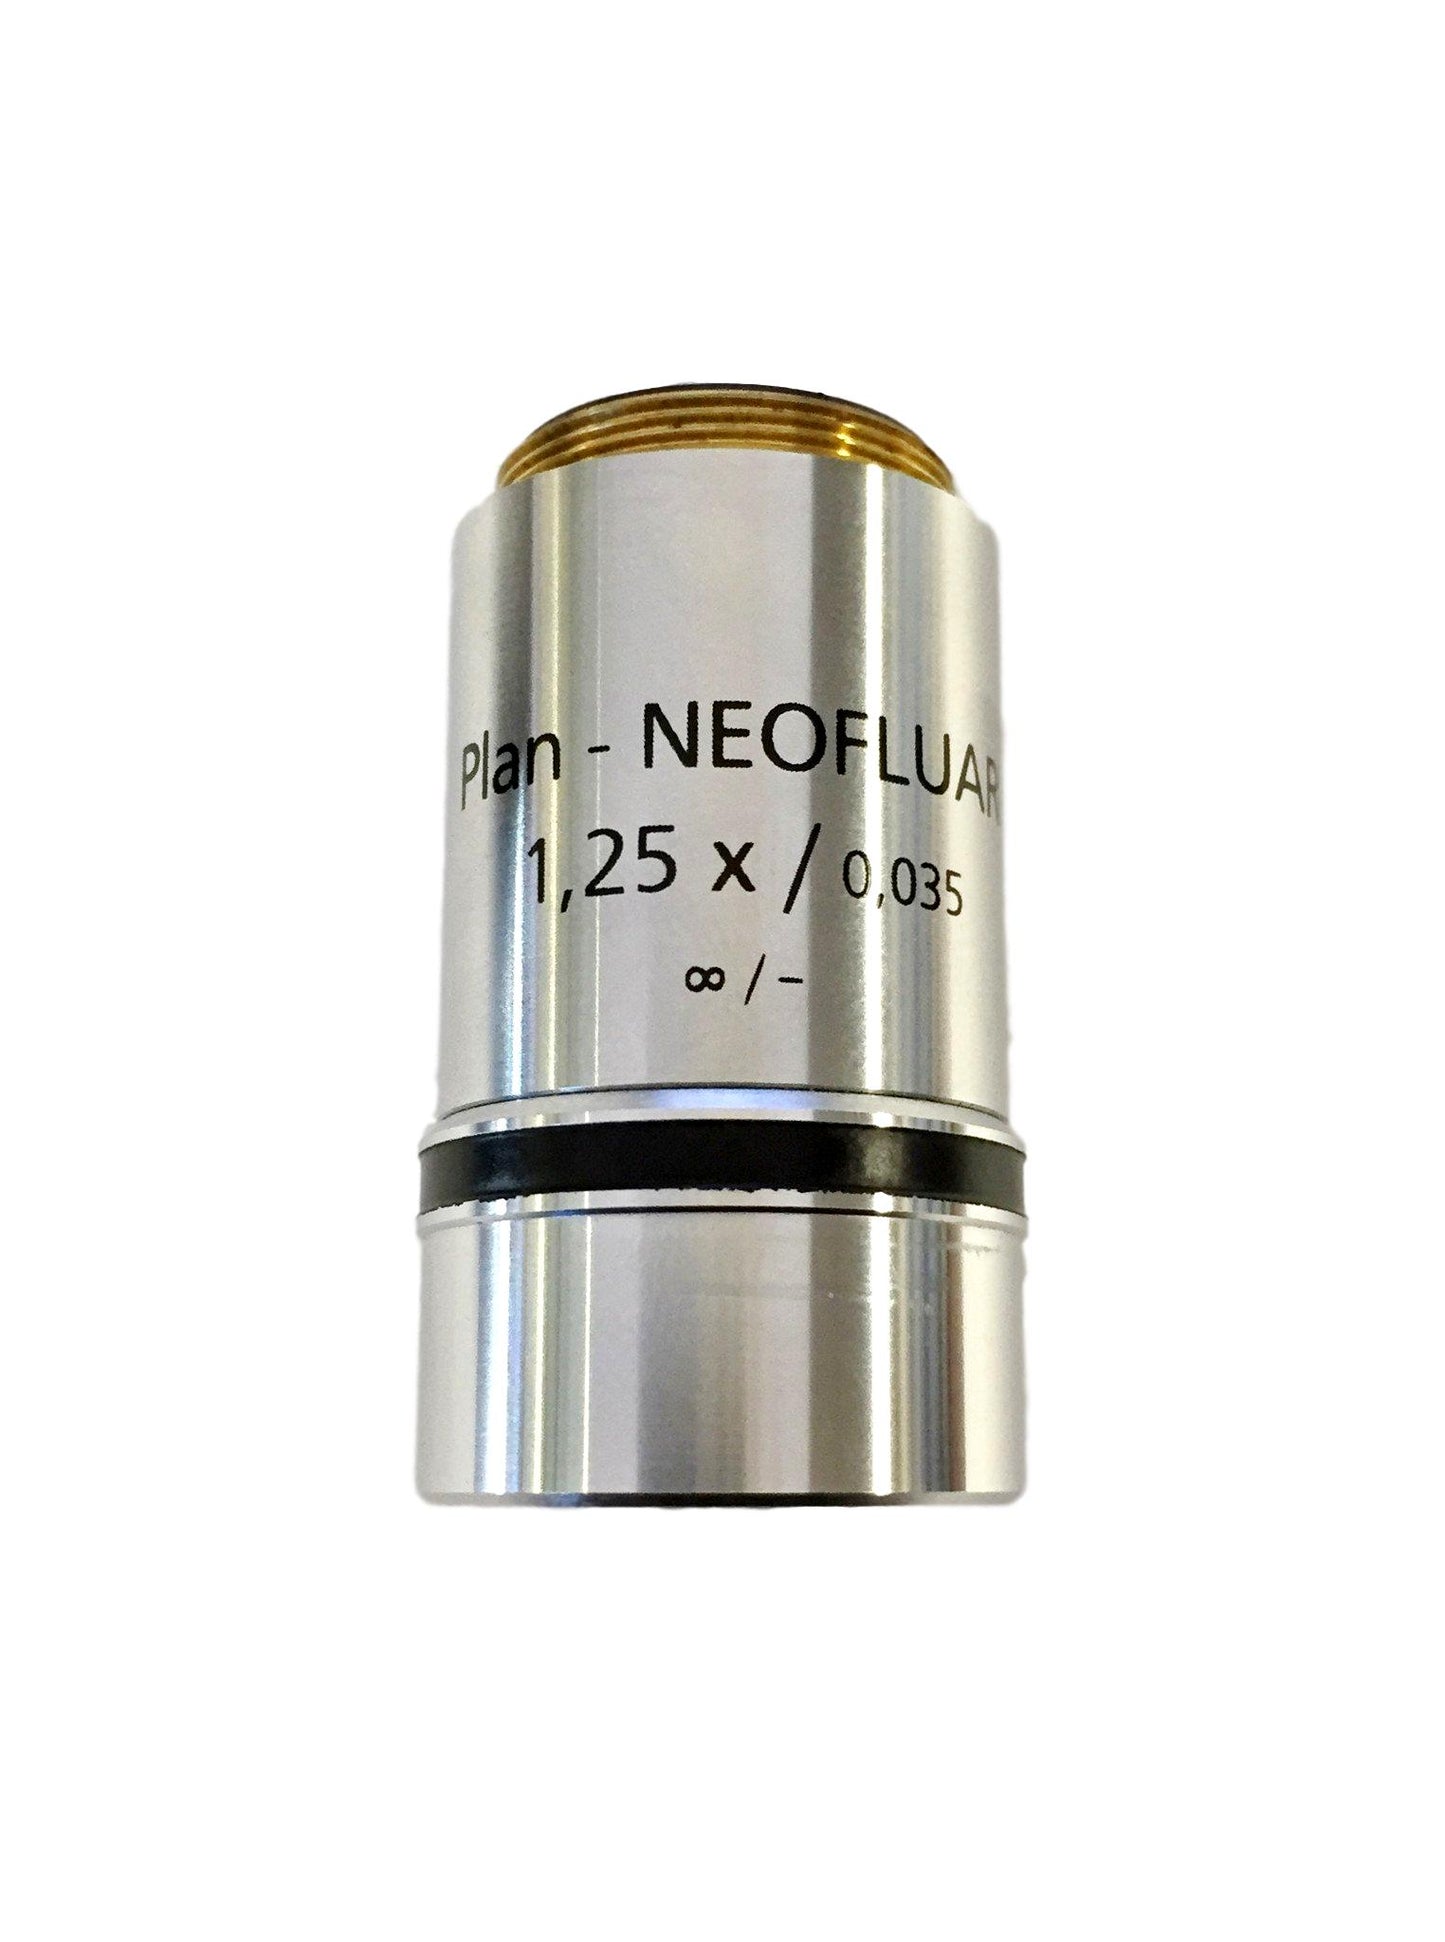 Zeiss Plan-NeoFluar 1.25x/0.035 NA Infinity Corrected Microscope Objective